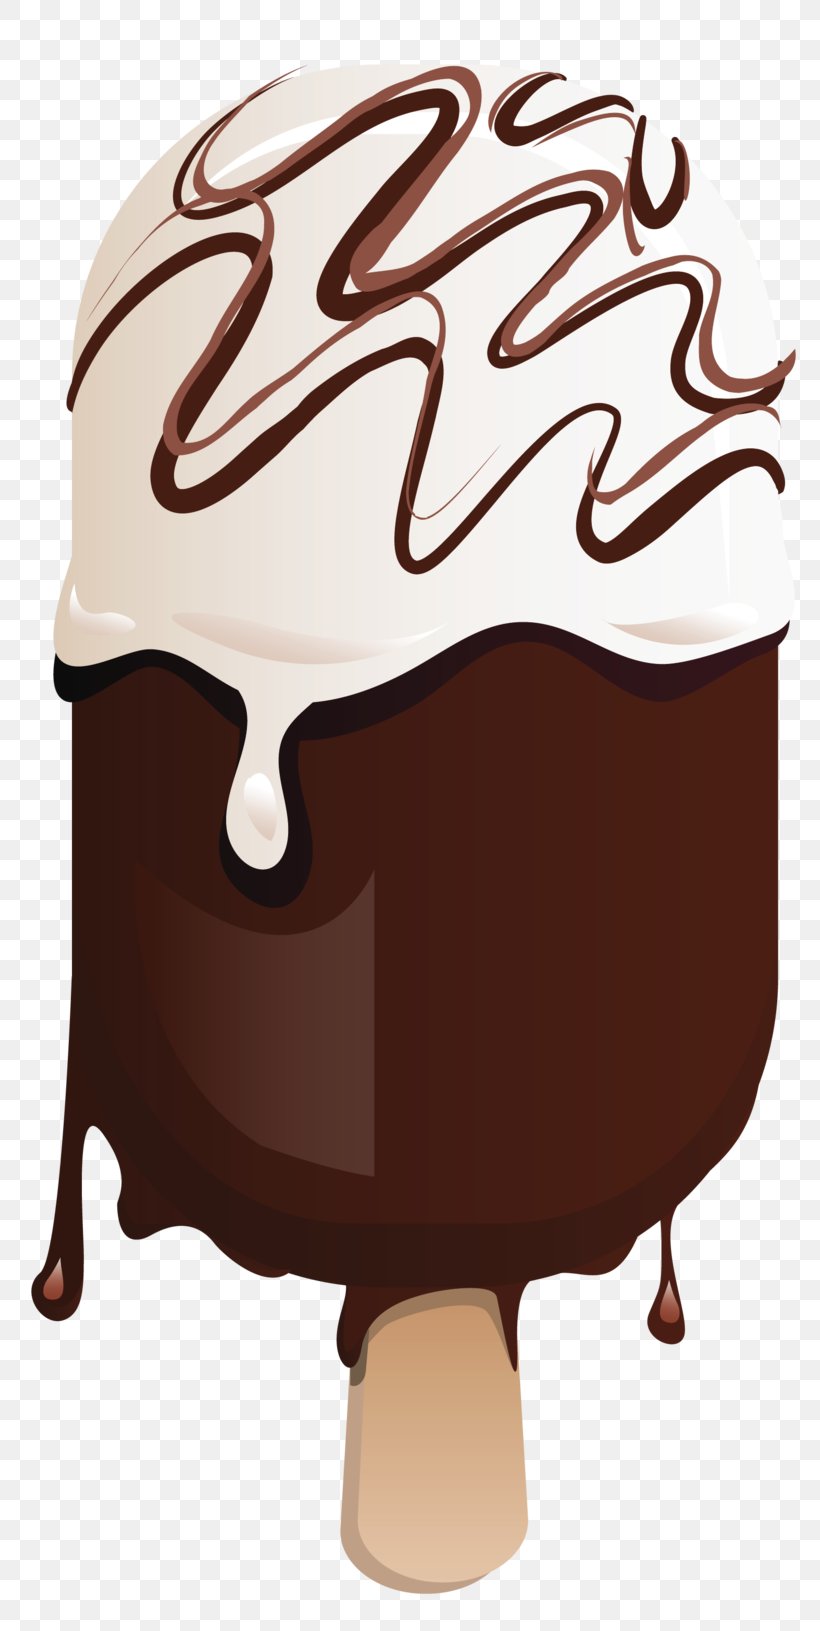 Ice Cream Ice Pop Chocolate Bar Clip Art, PNG, 800x1631px, Ice Cream, Cake, Candy, Chocolate, Chocolate Bar Download Free